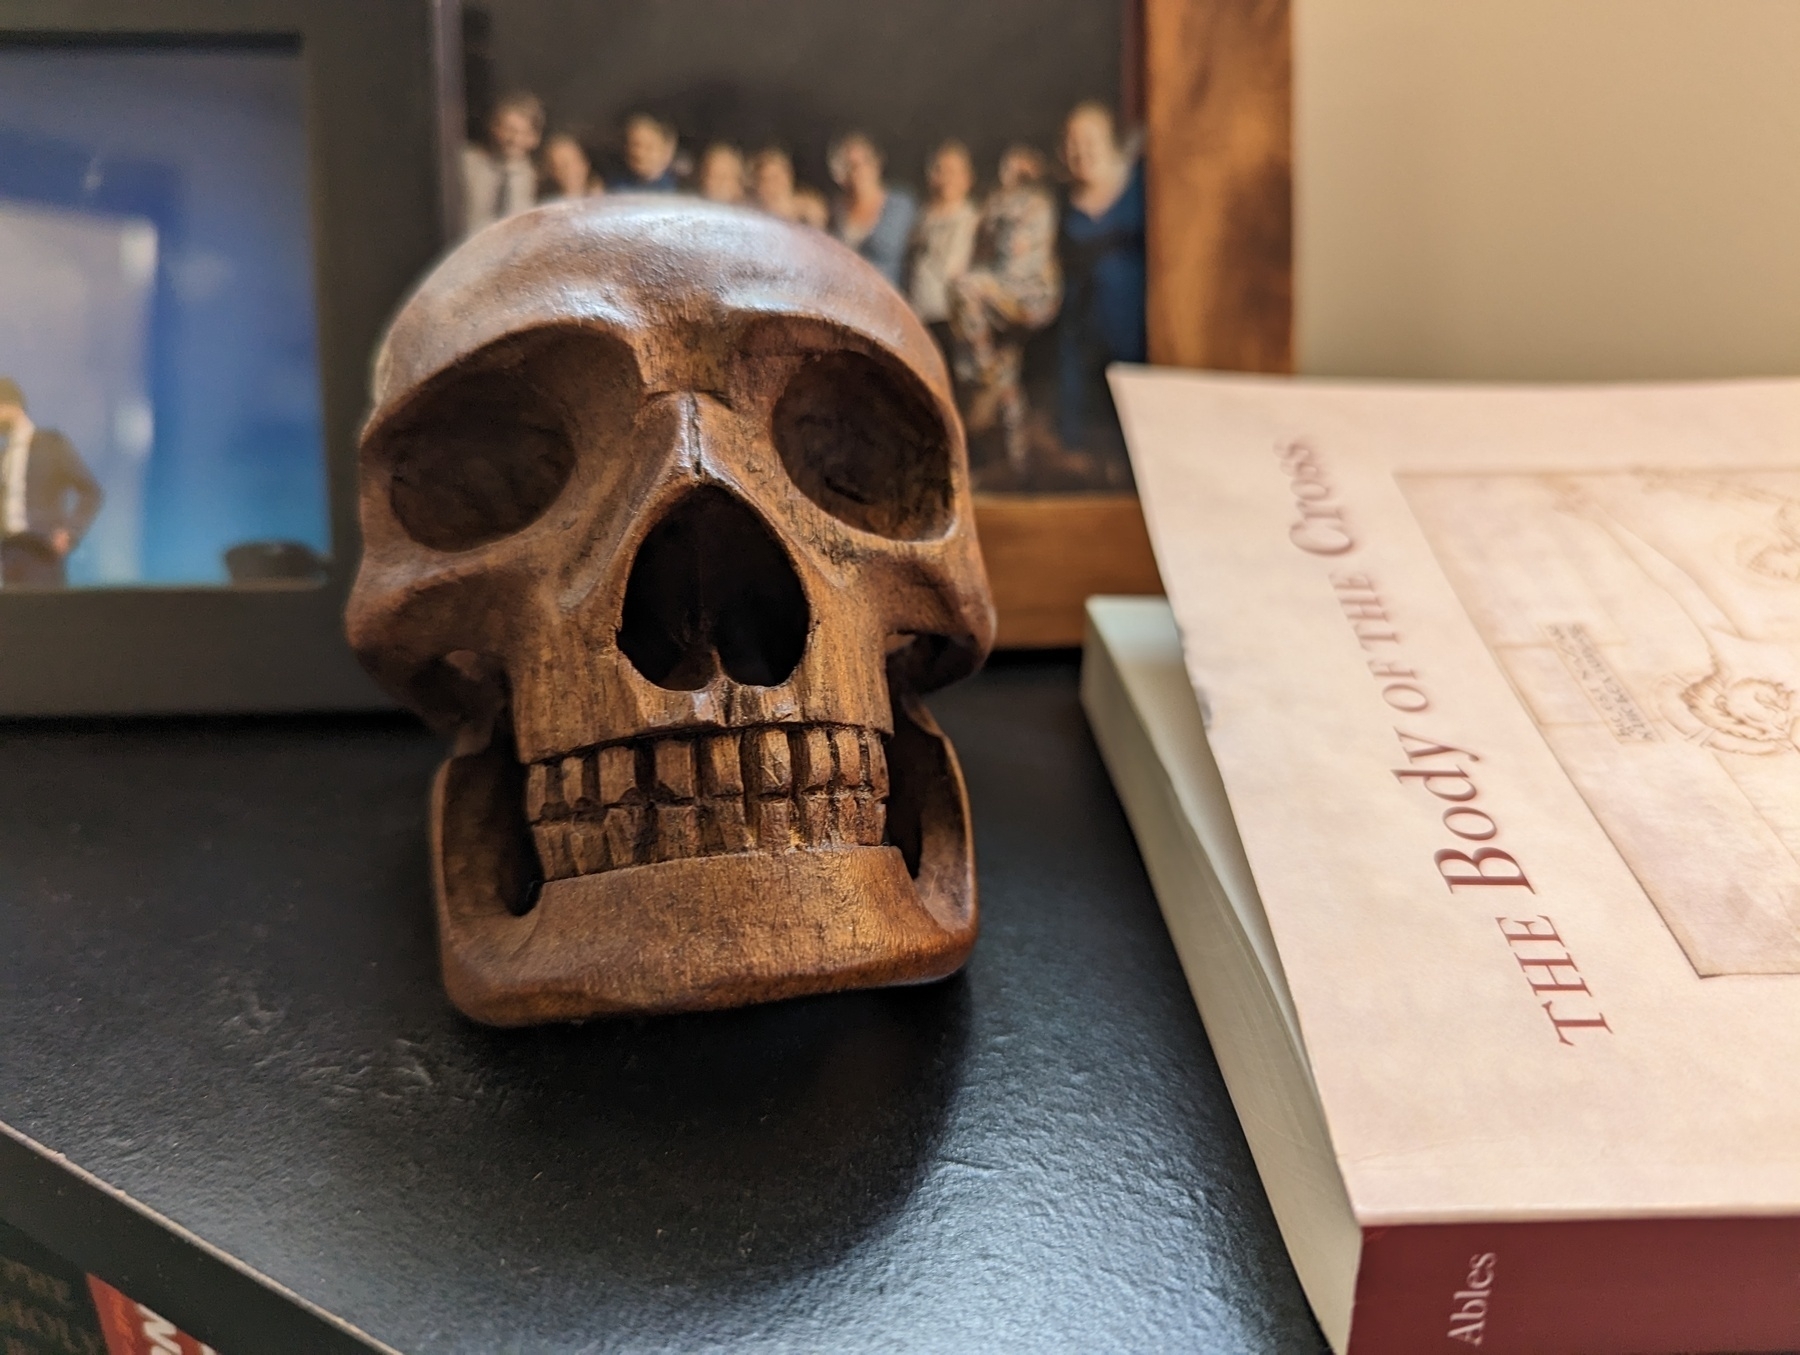 A skull on a shelf: memento mori